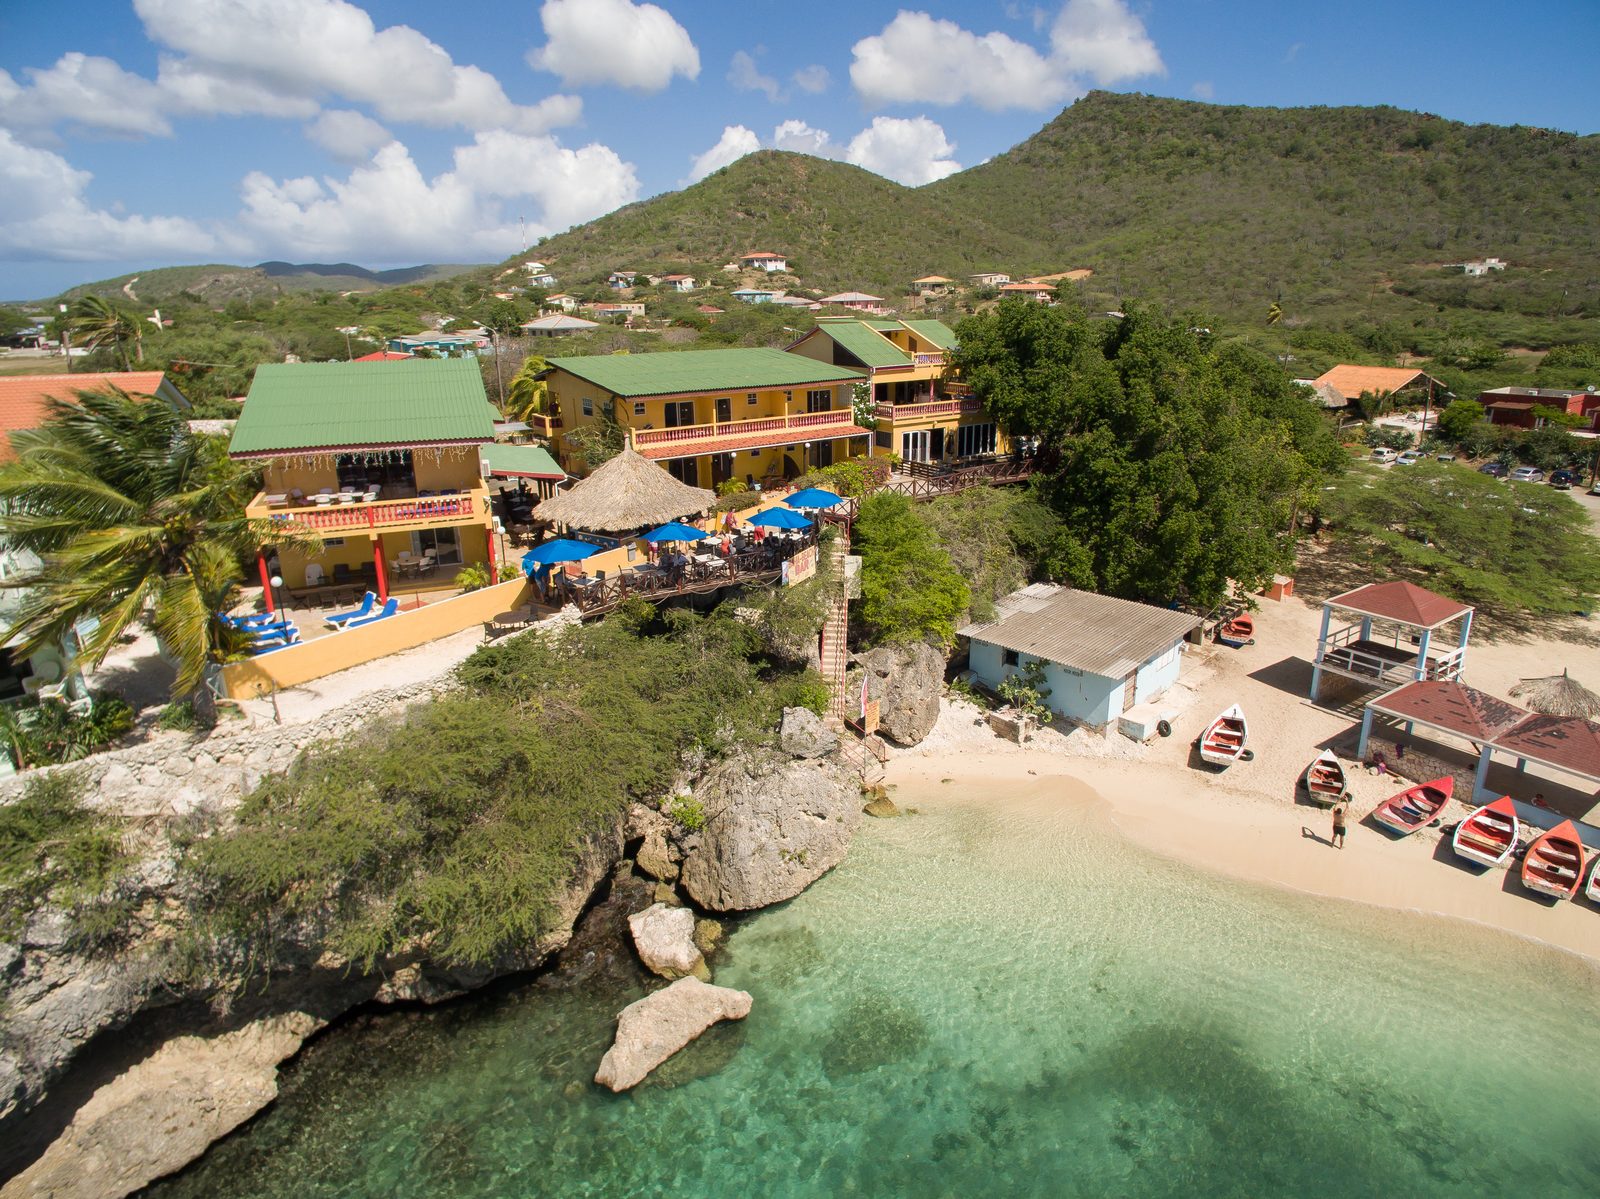 Vakantie Curaçao september